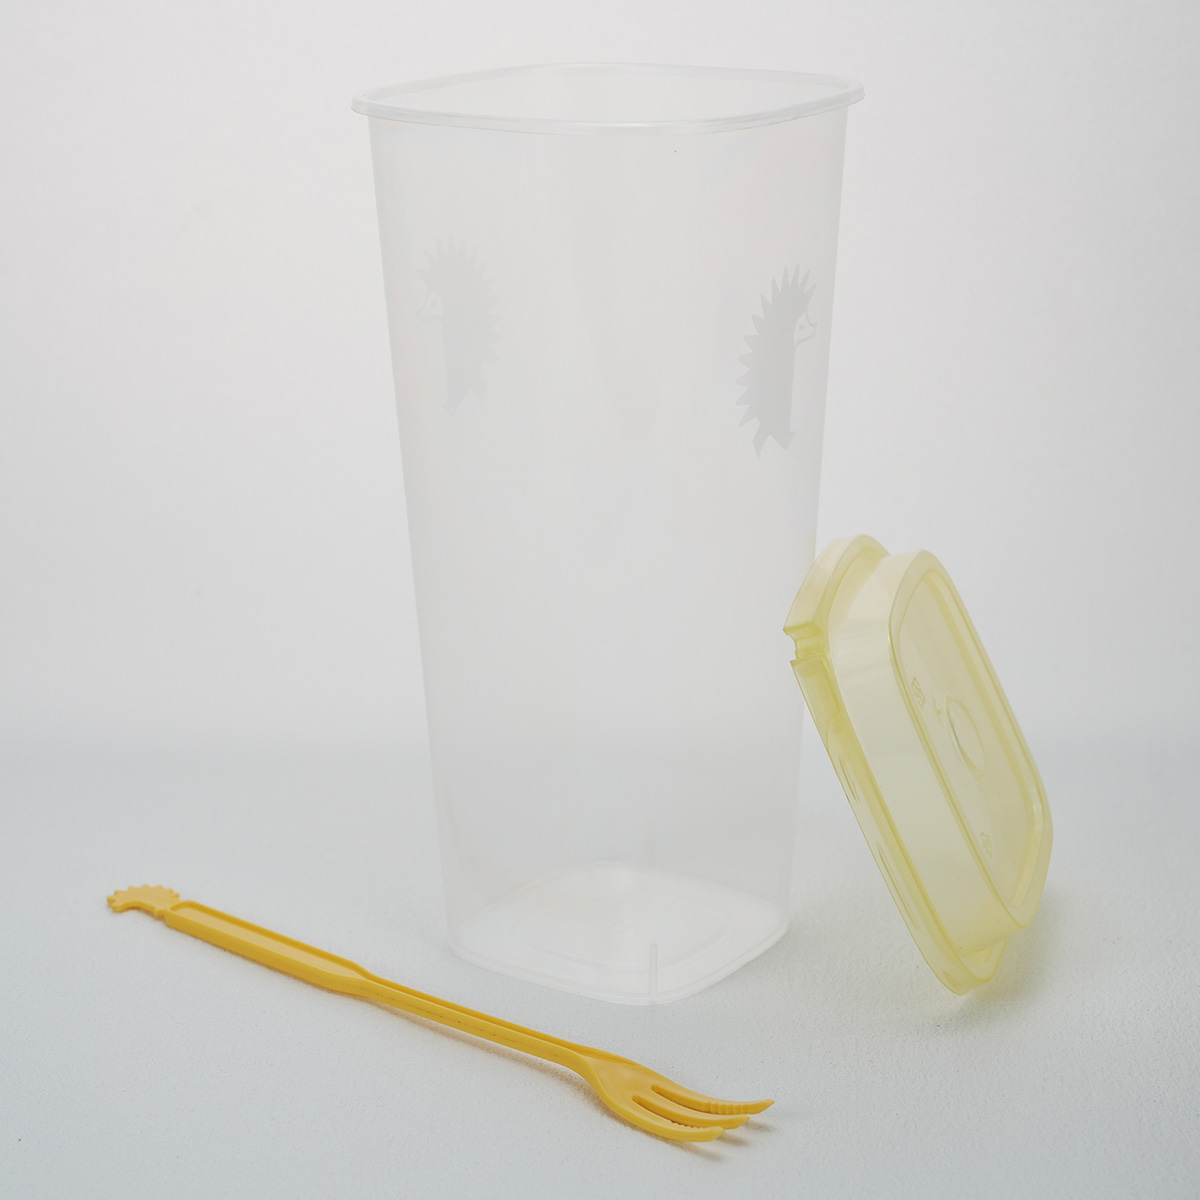 प्लास्टिक कप (2)